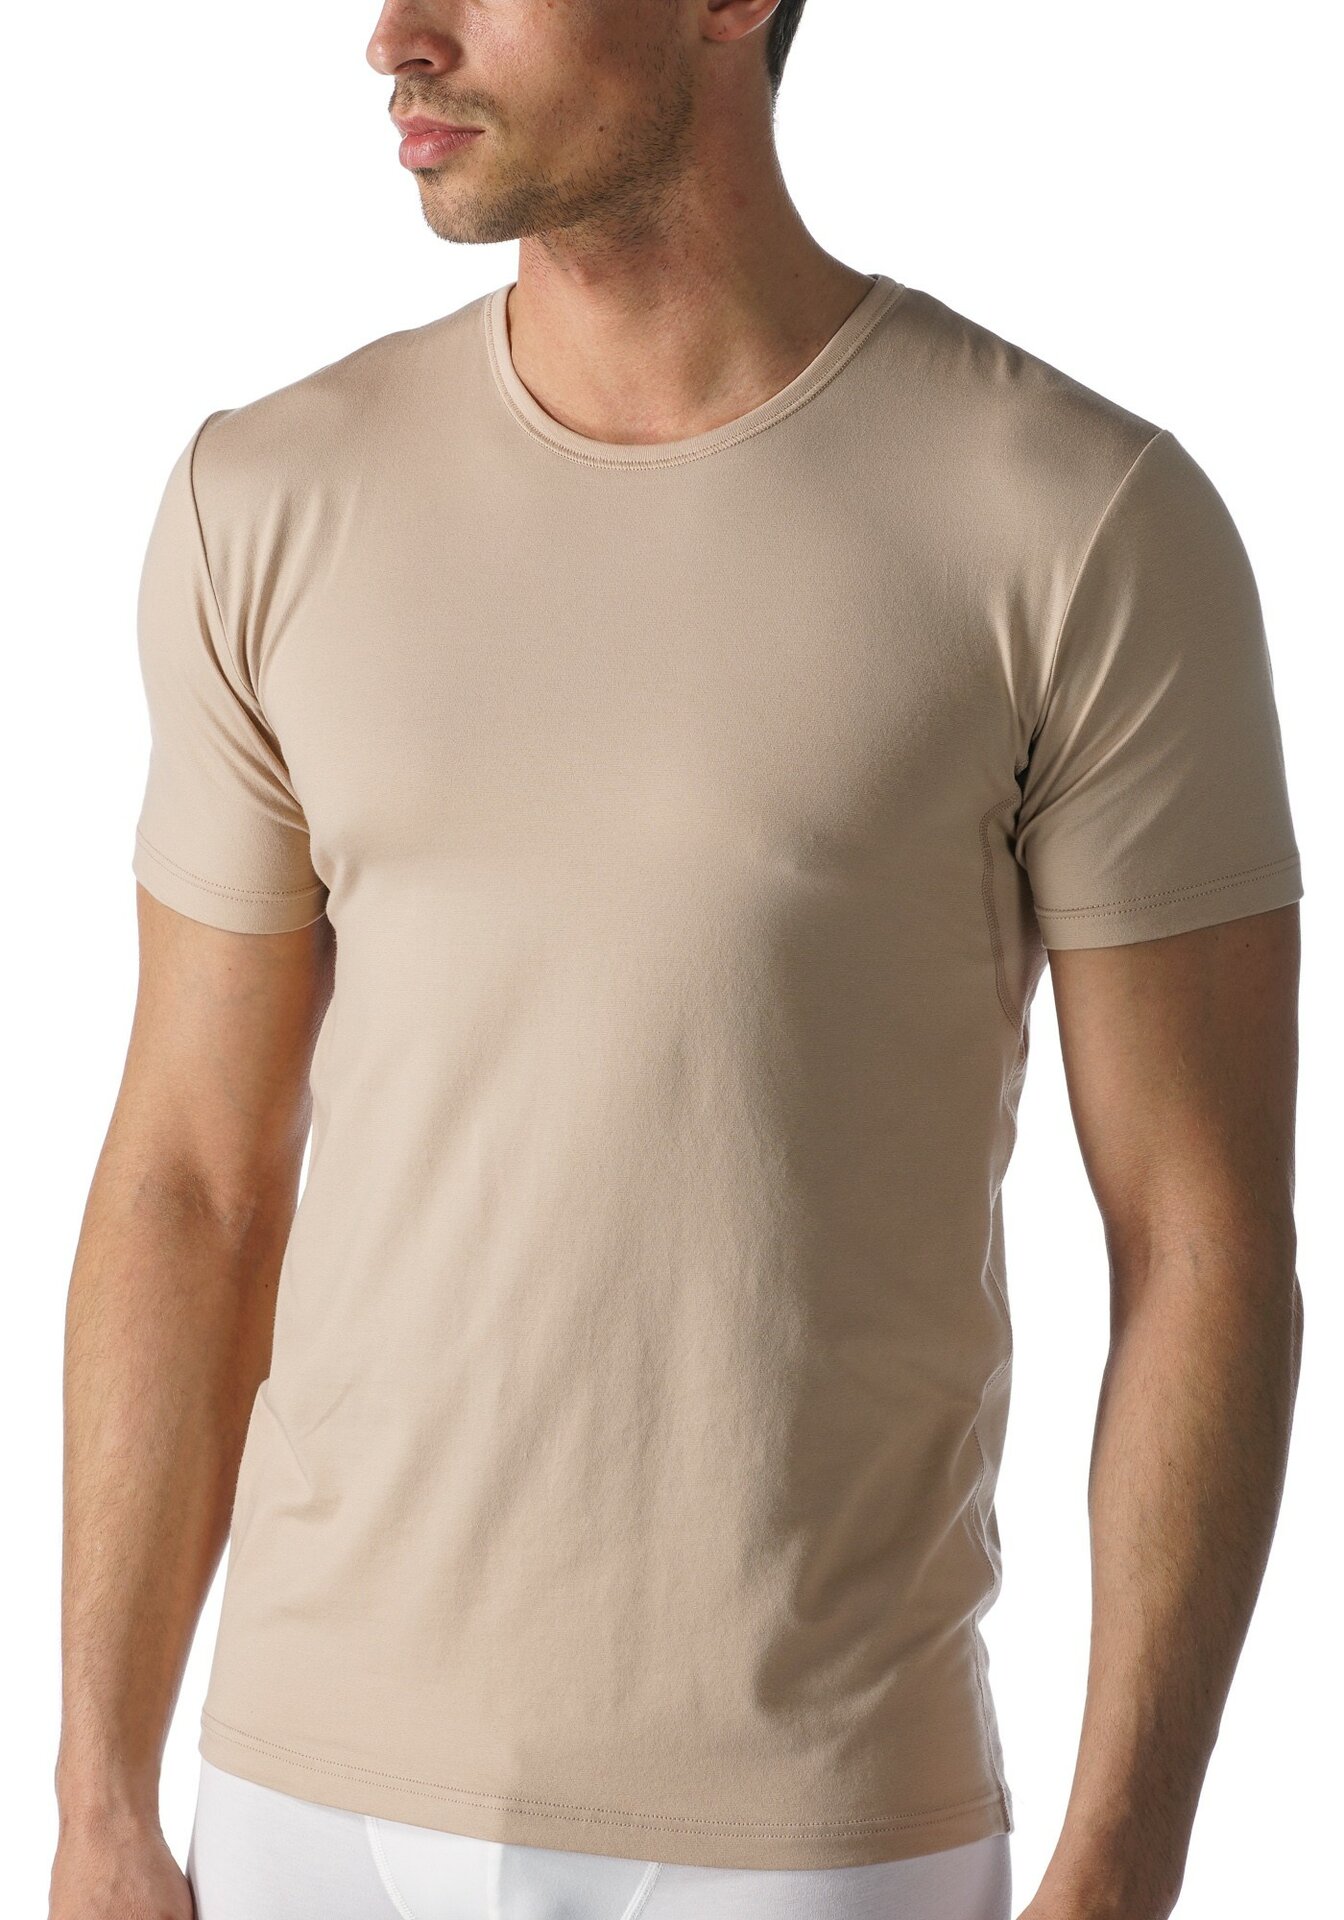 Mey Serie Dry Cotton Functional Herren Crew-Neck Shirt